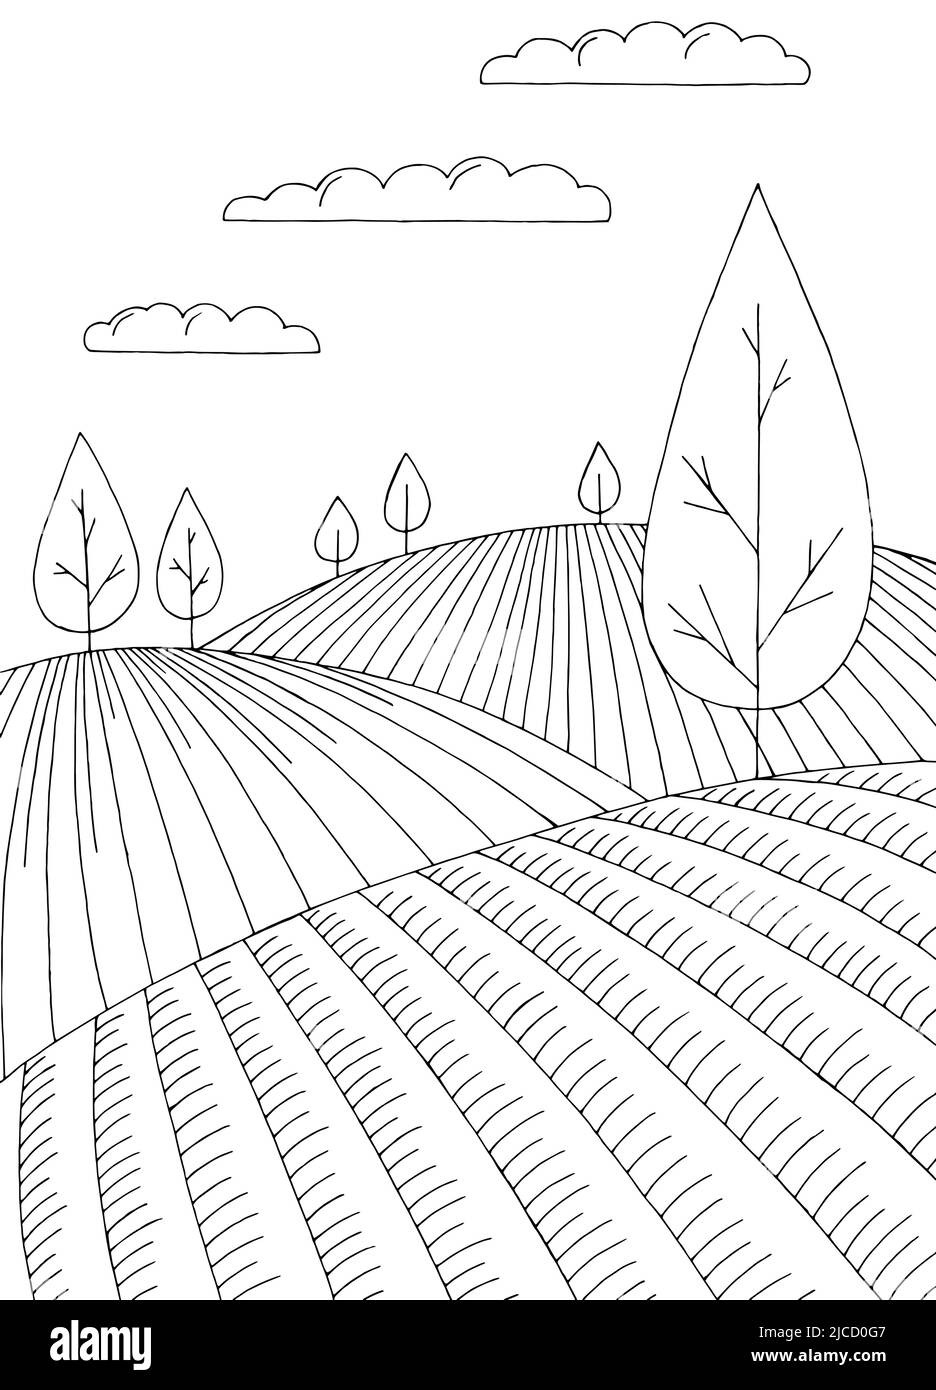 Feld Einfachheit Grafik schwarz weiß vertikale Landschaft Skizze Illustration Vektor Stock Vektor